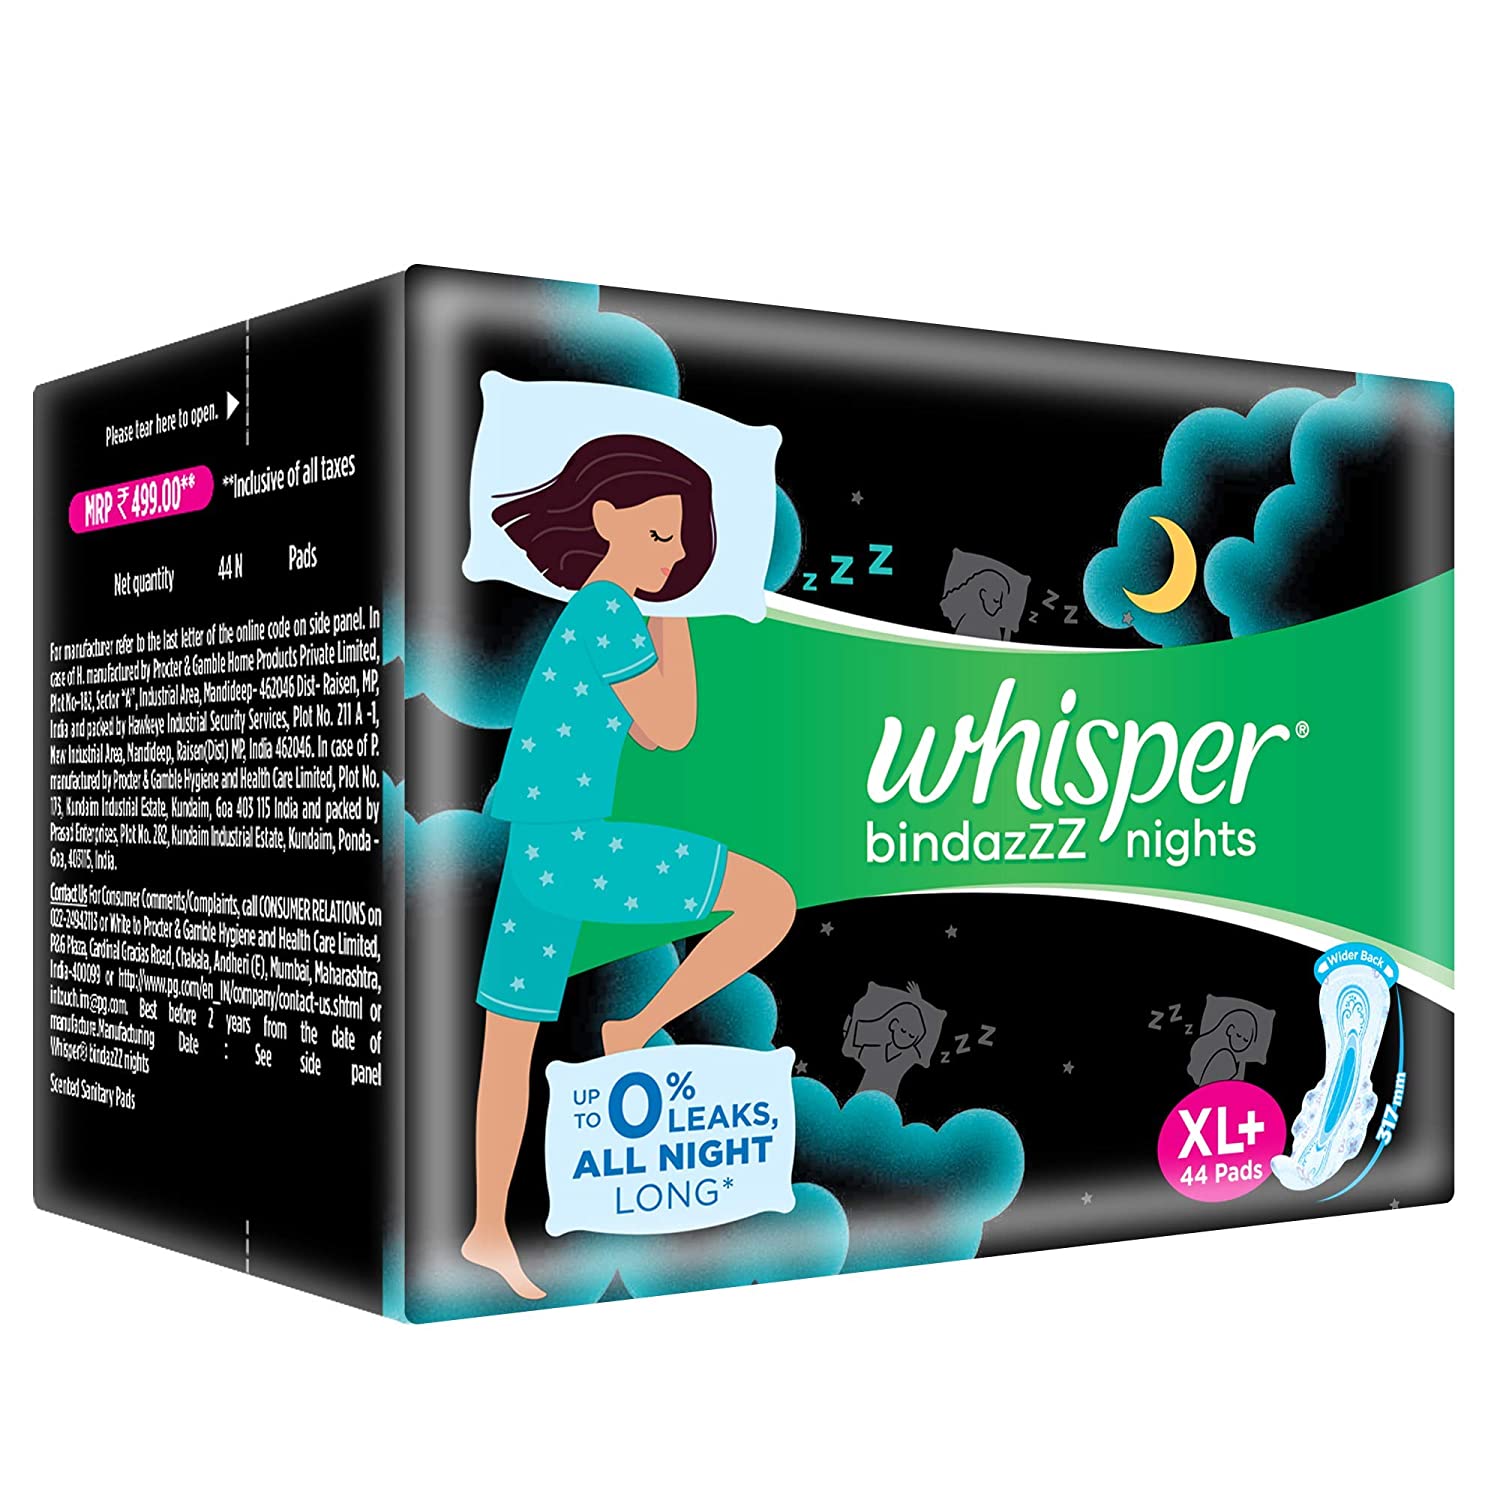 Whisper Ultra Night Sanitary Pads for Women, XL+ 15 Napkins